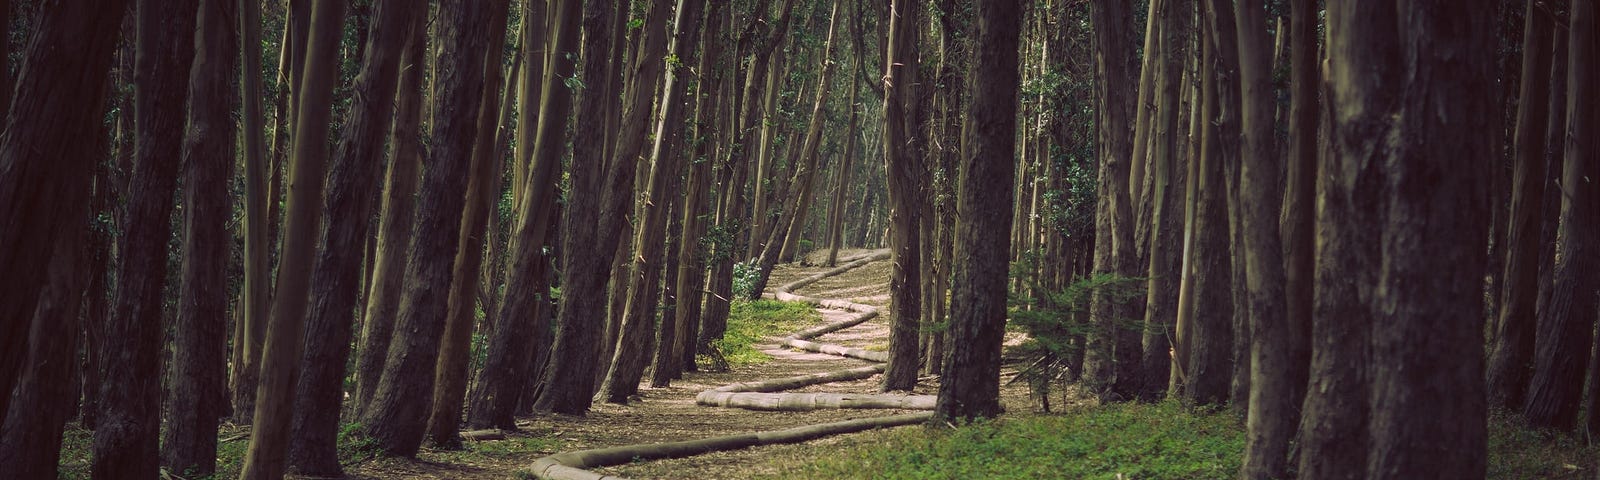 a path winds through a forest